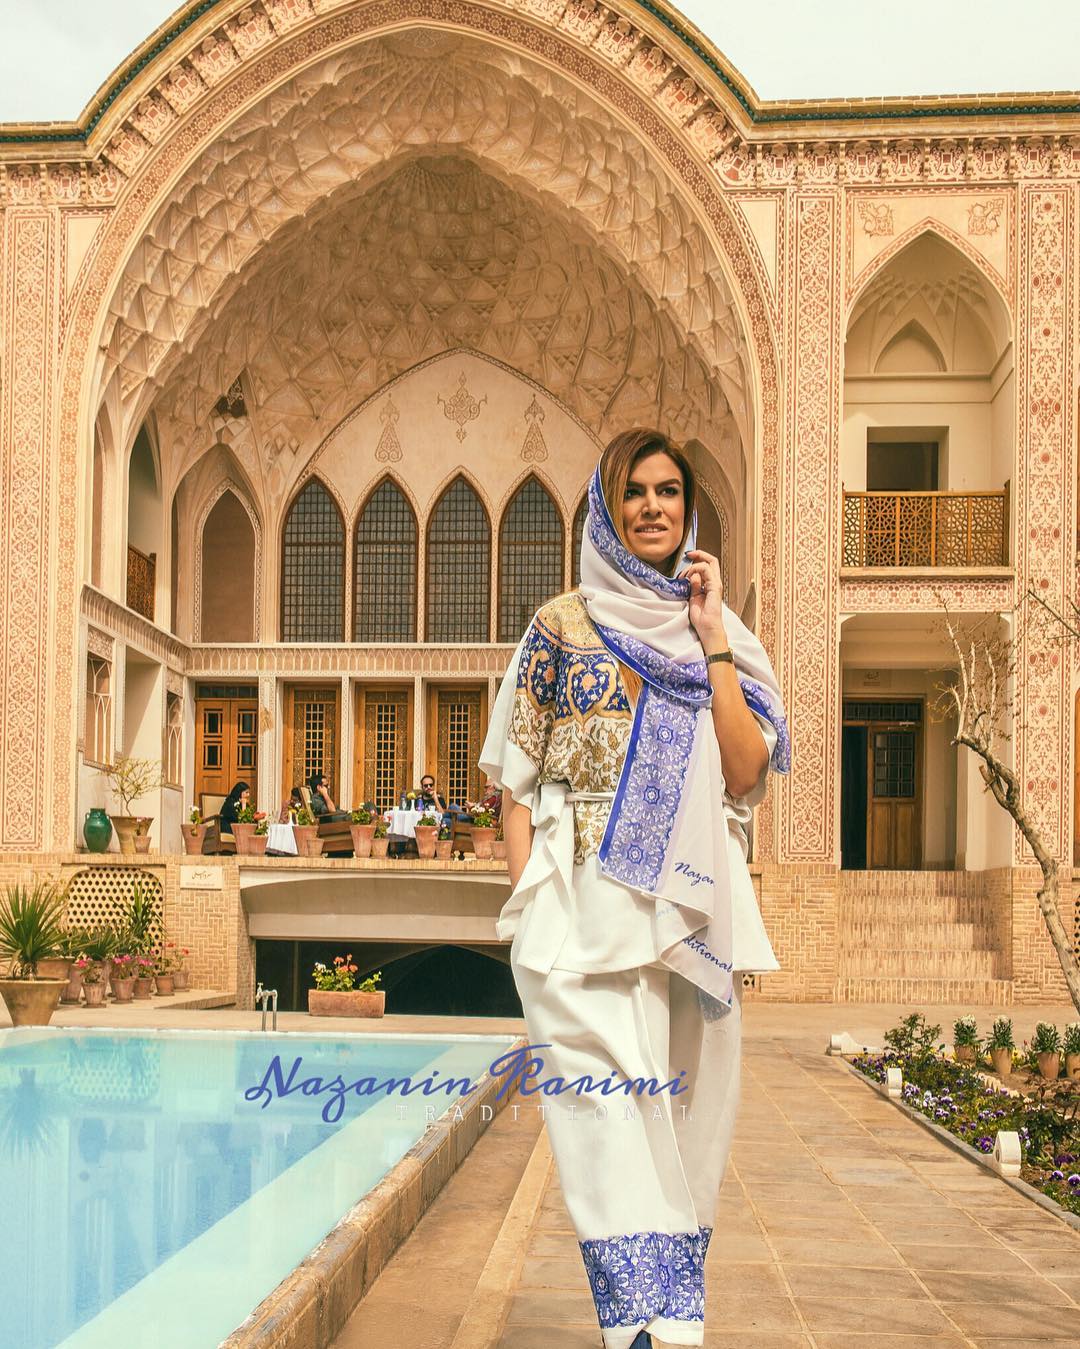 Iranian women welcome the new fashion